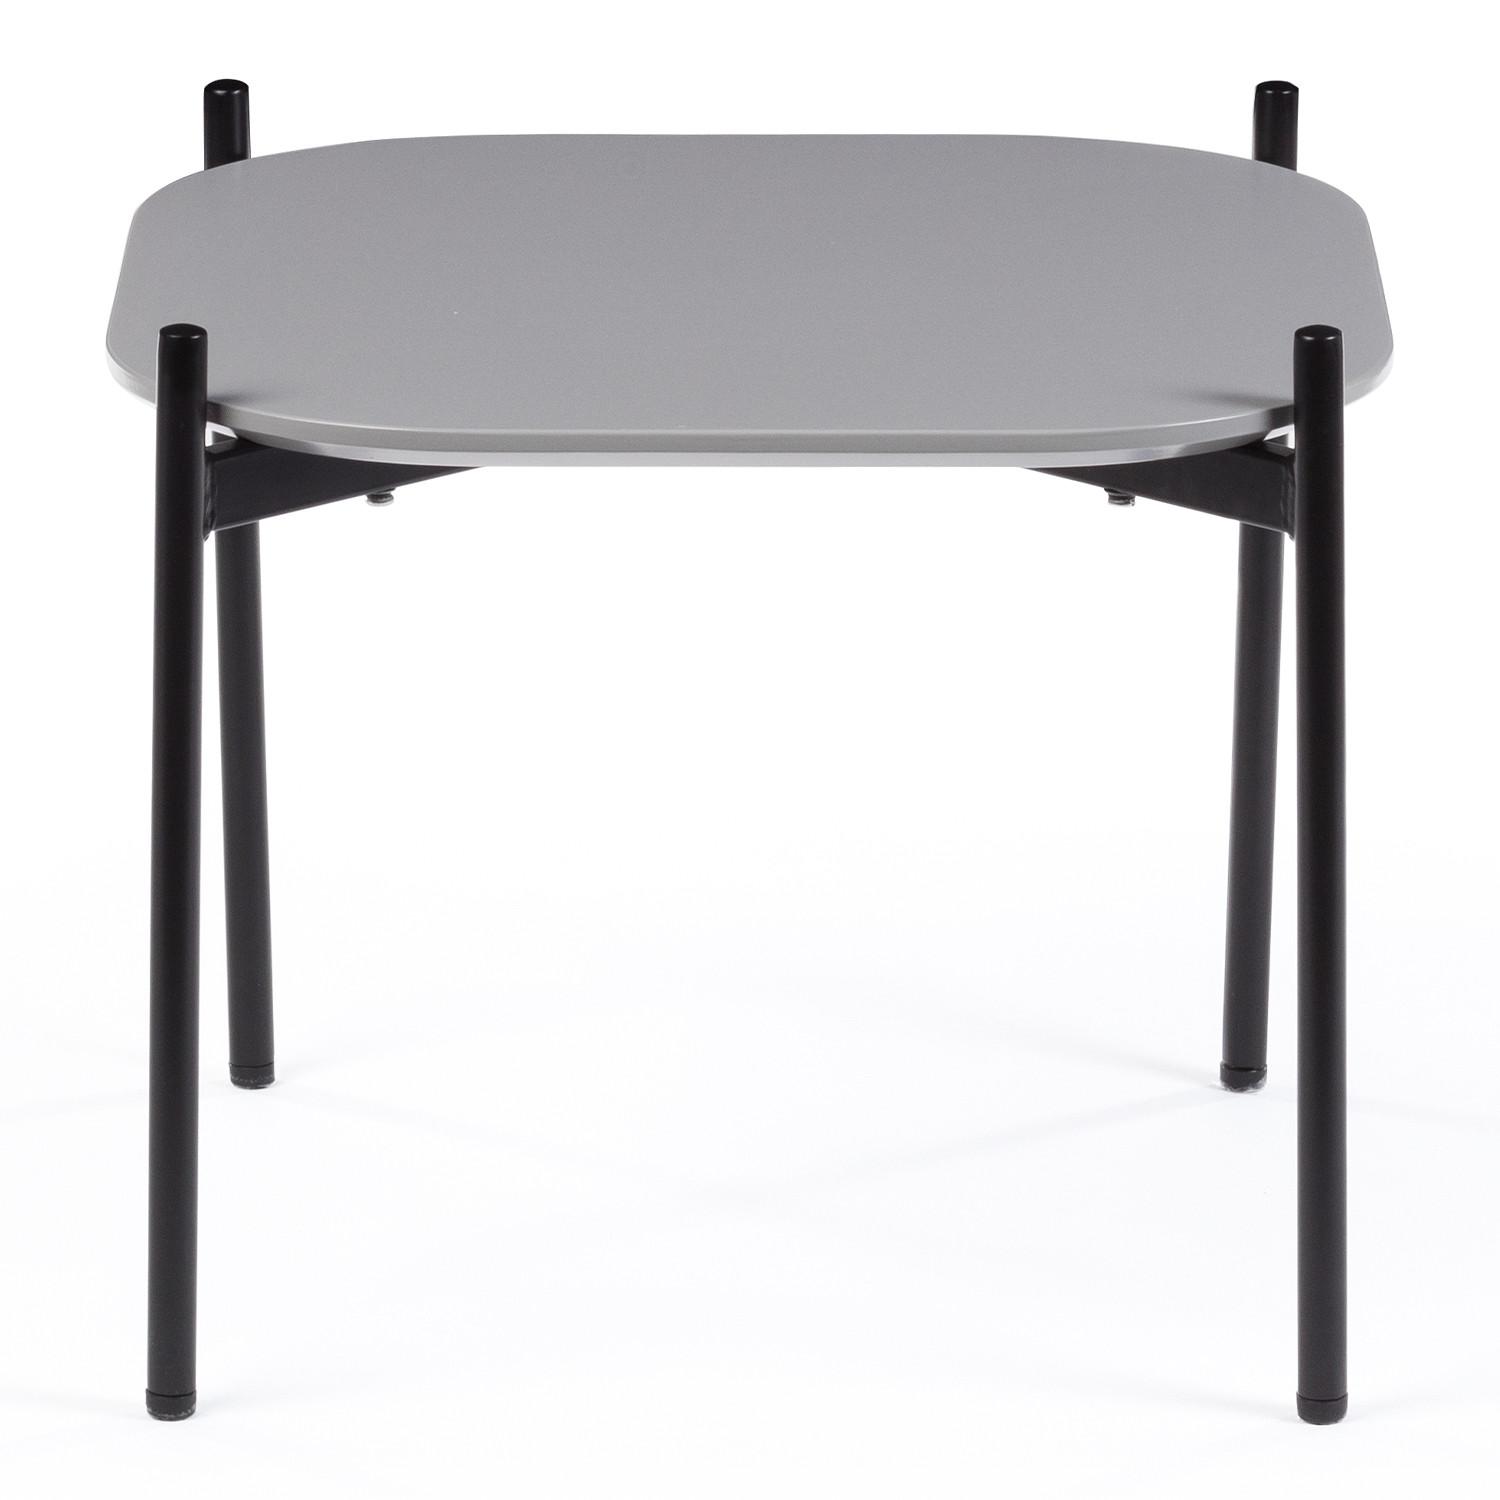 Table basse grise 50cm